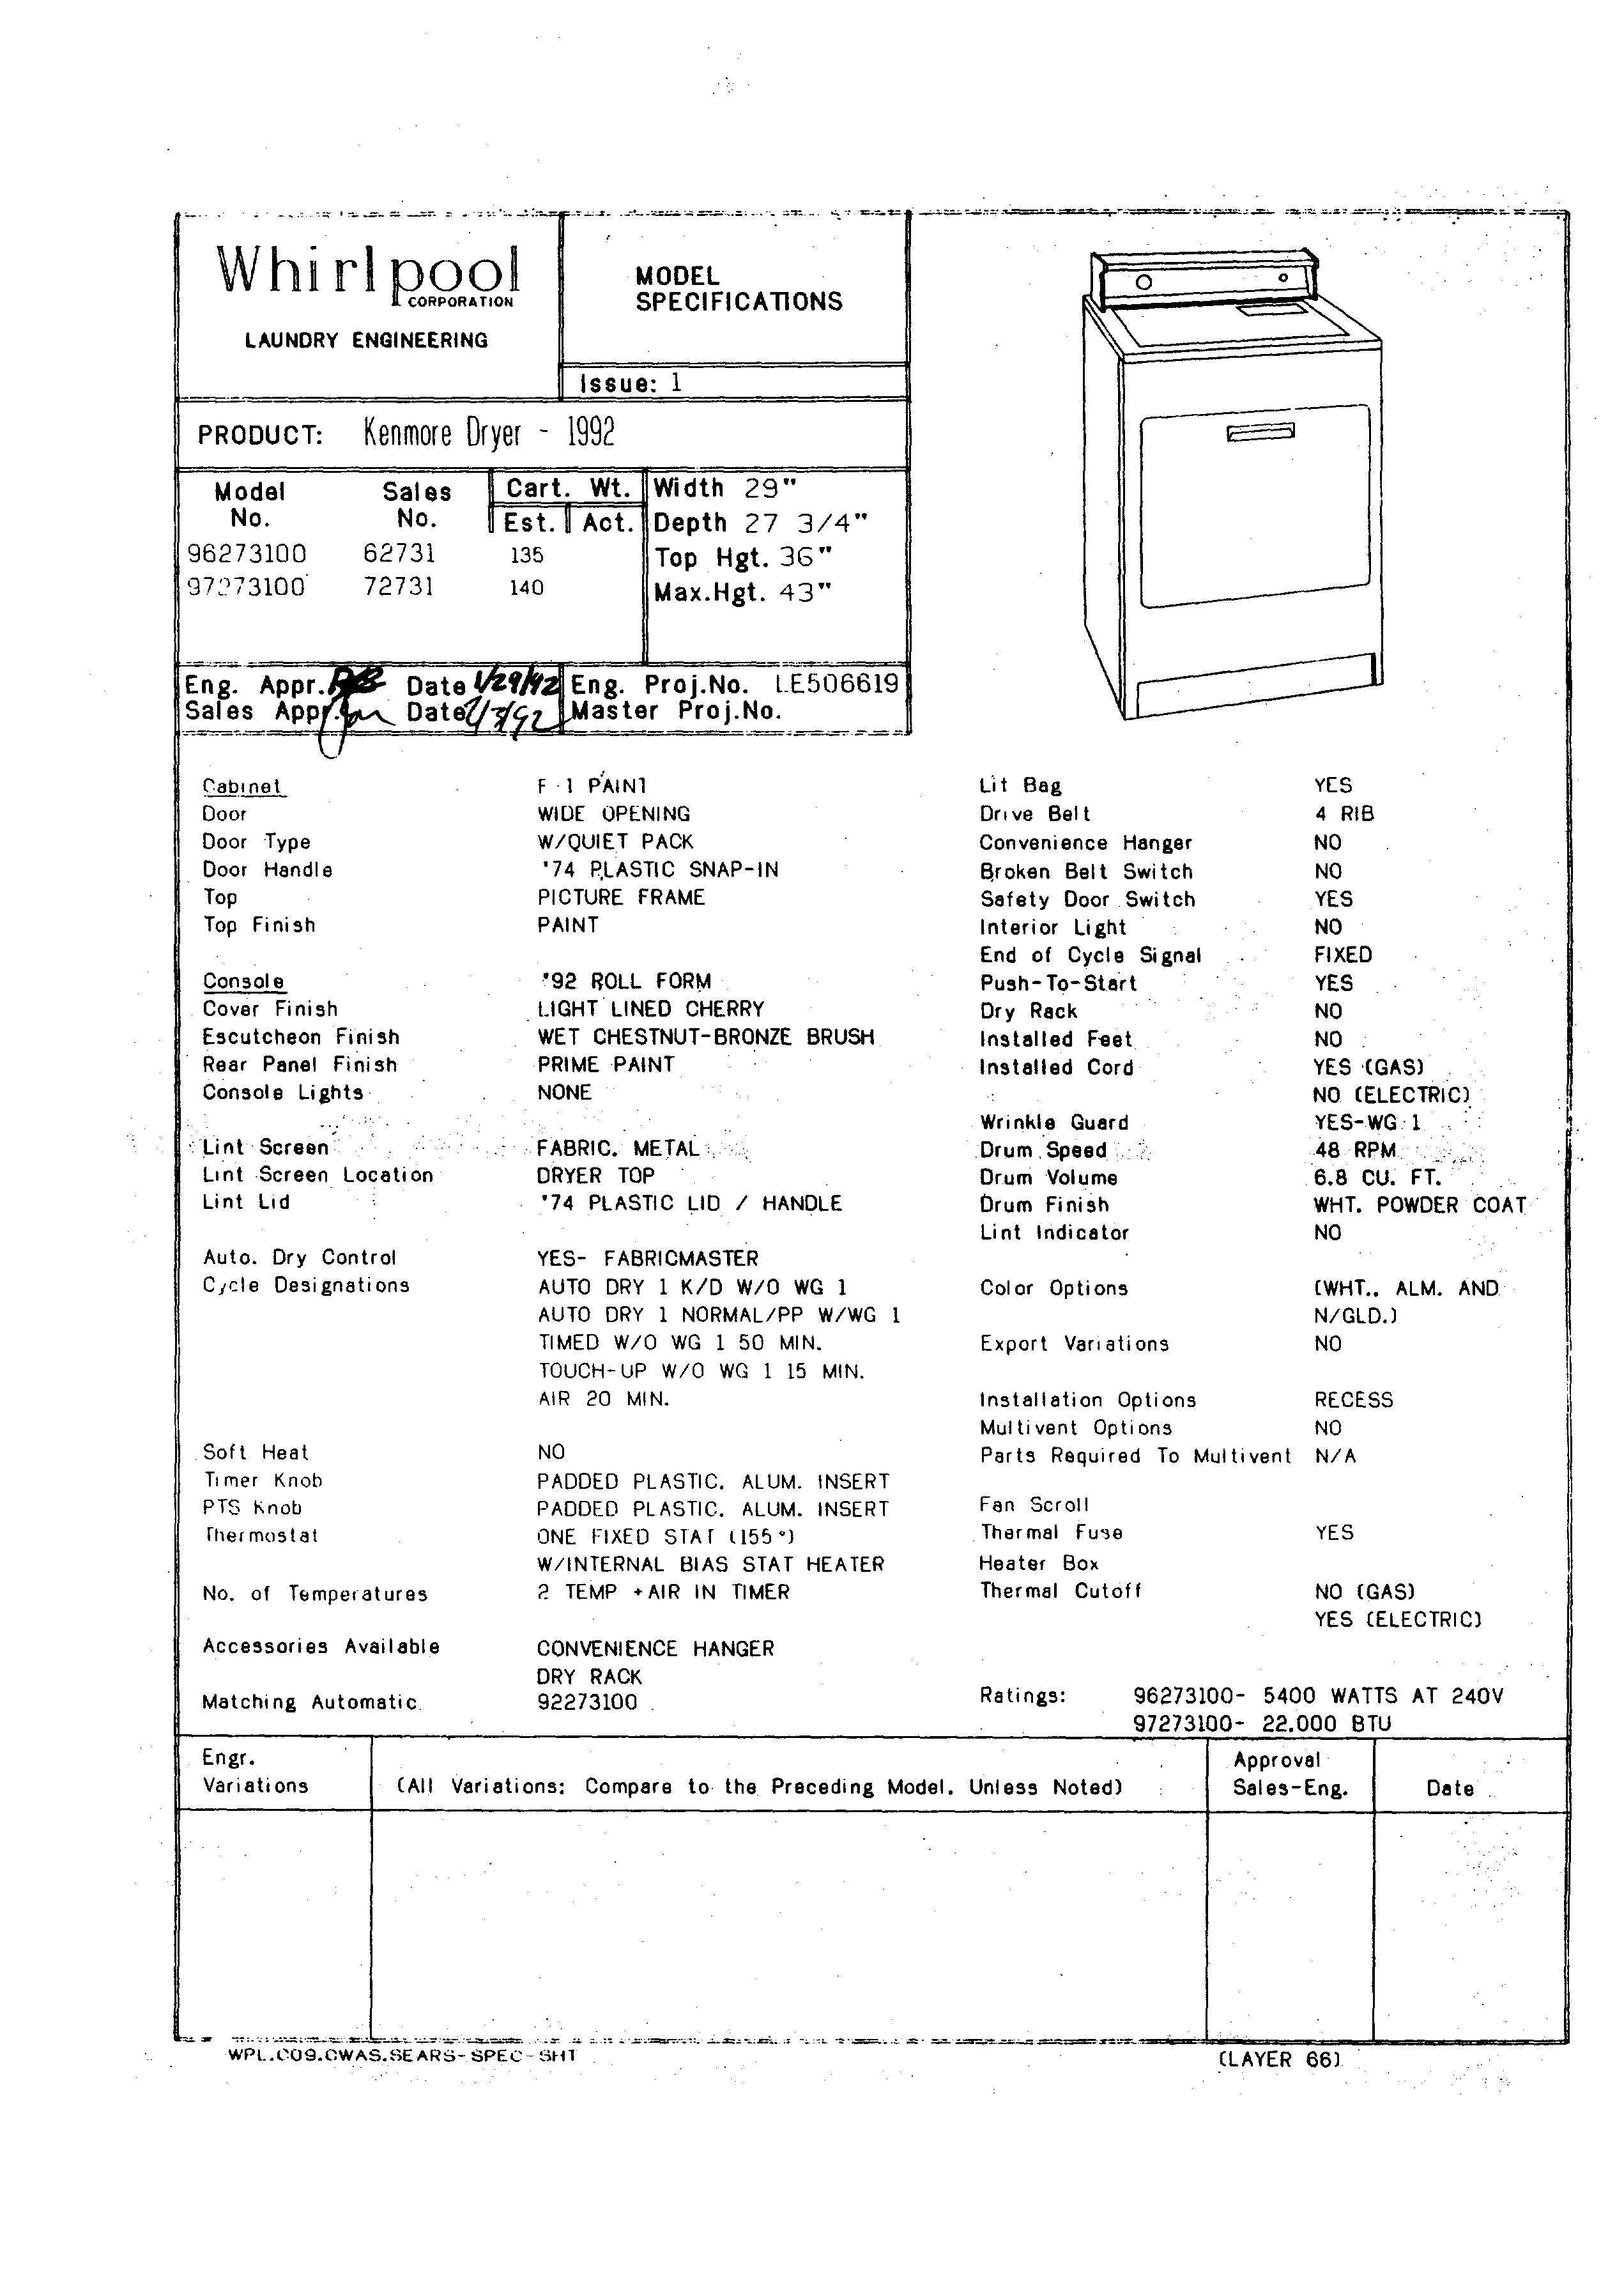 Whirlpool 96273100 Washer/Dryer User Manual